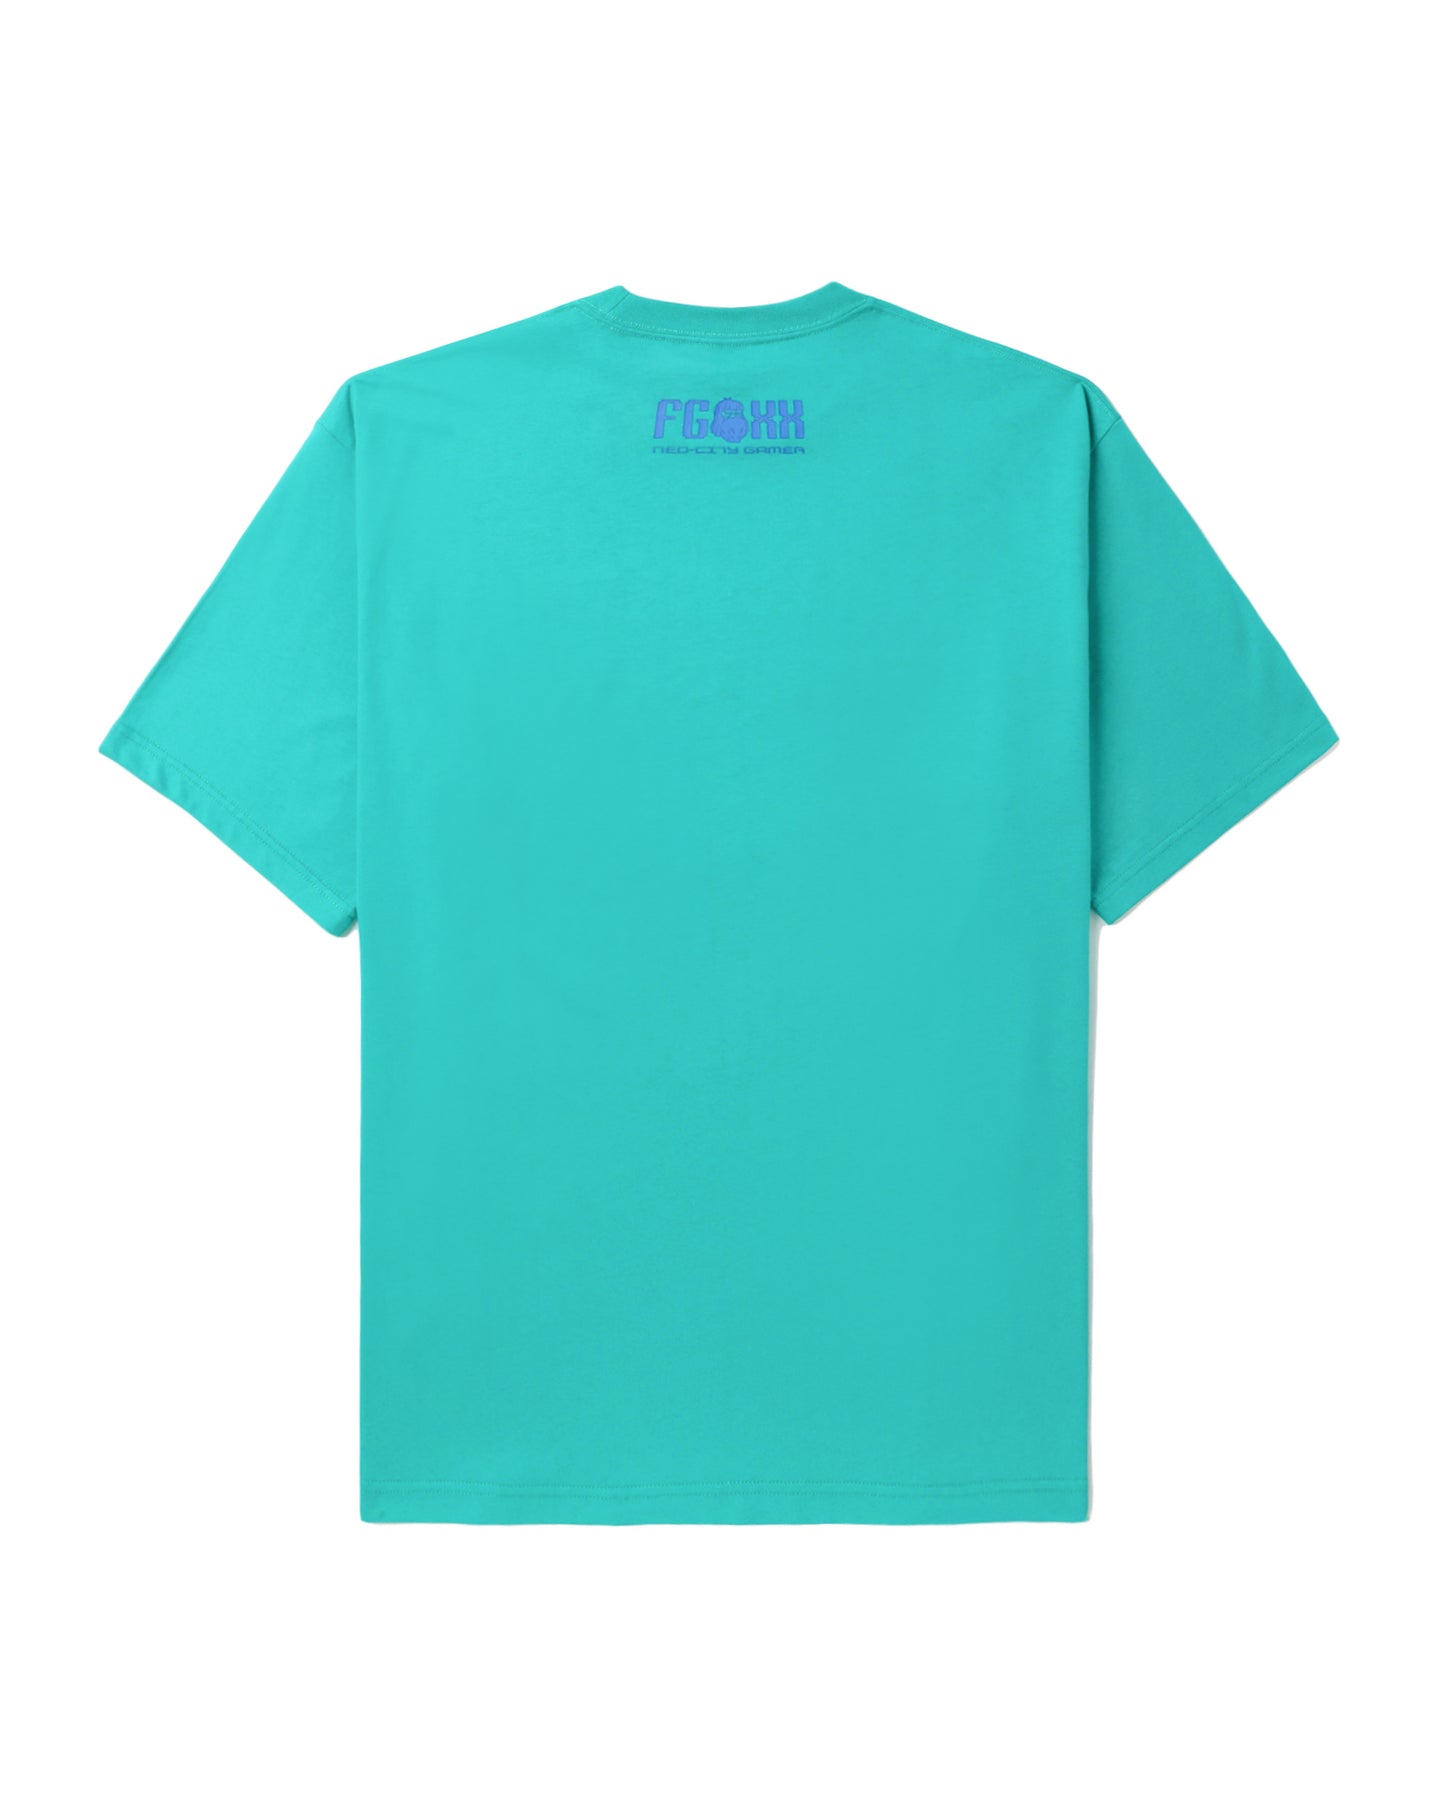 Men's - Embrace The Metaverse Blue T-shirt